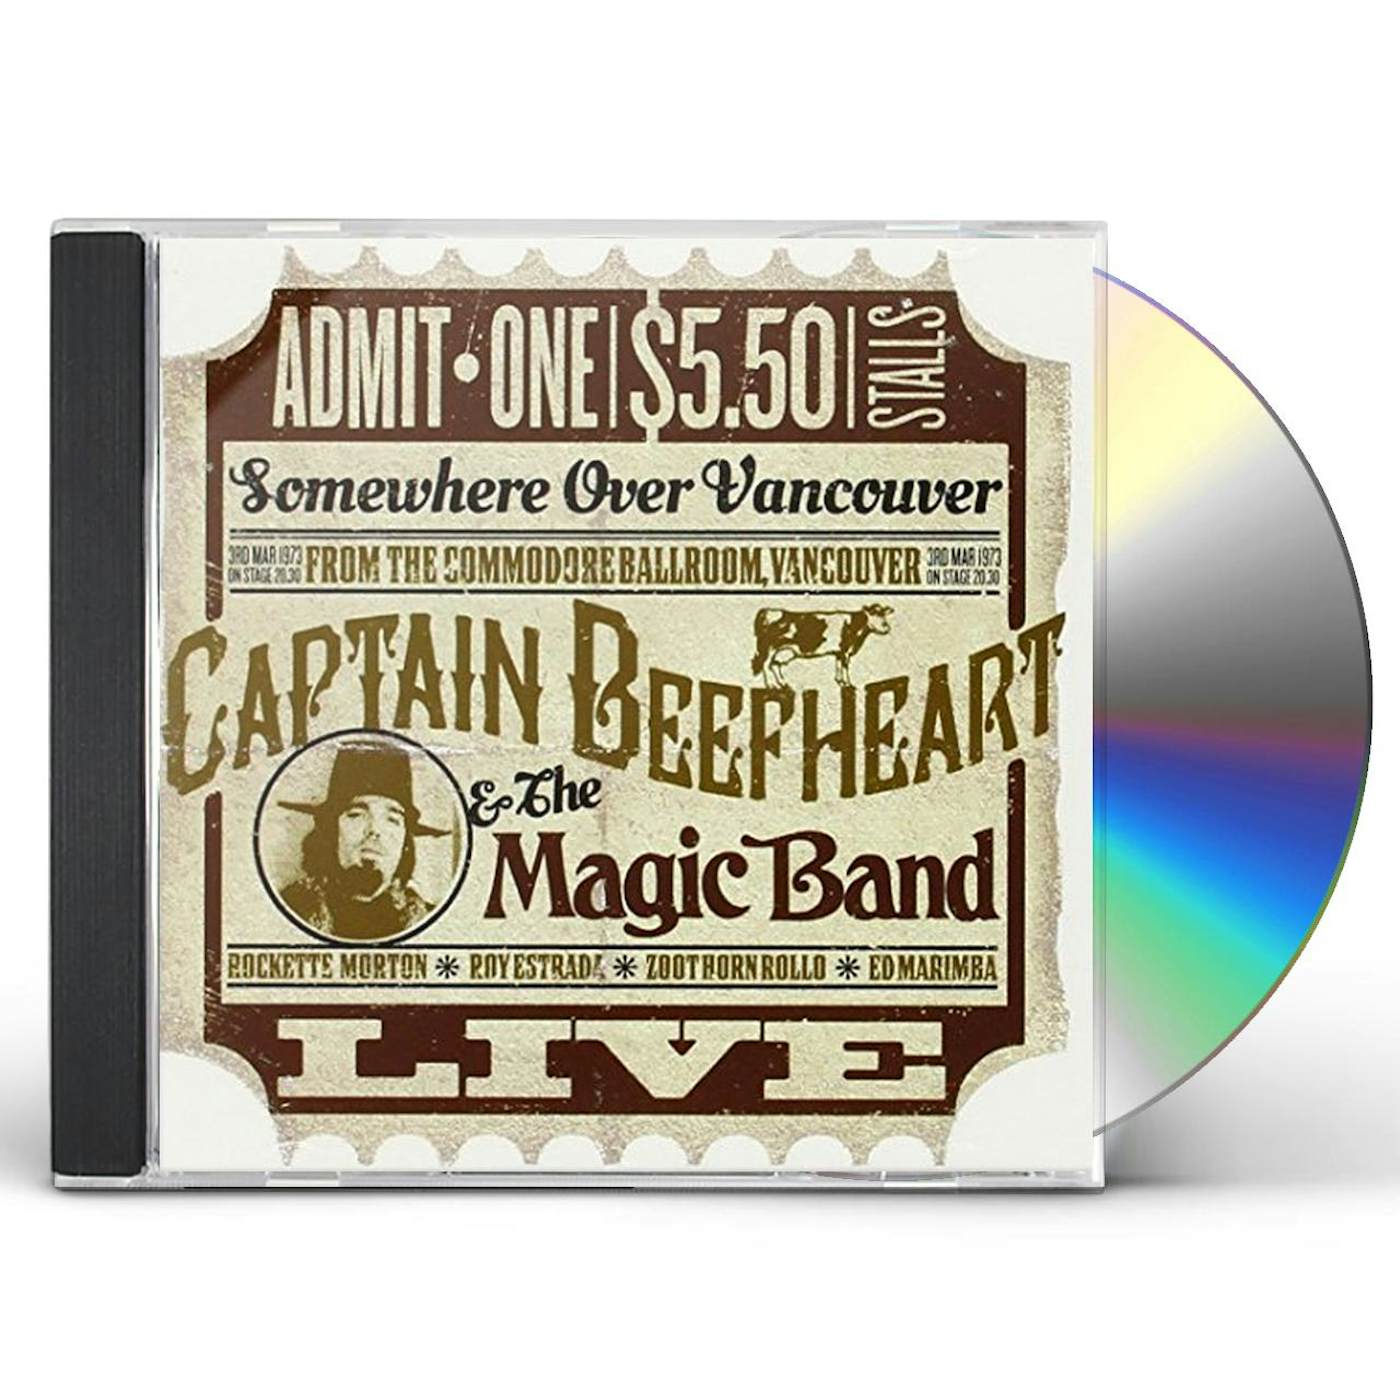 Captain Beefheart & His Magic Band COMMODORE BALLROOM VANCOUVER 1973 CD